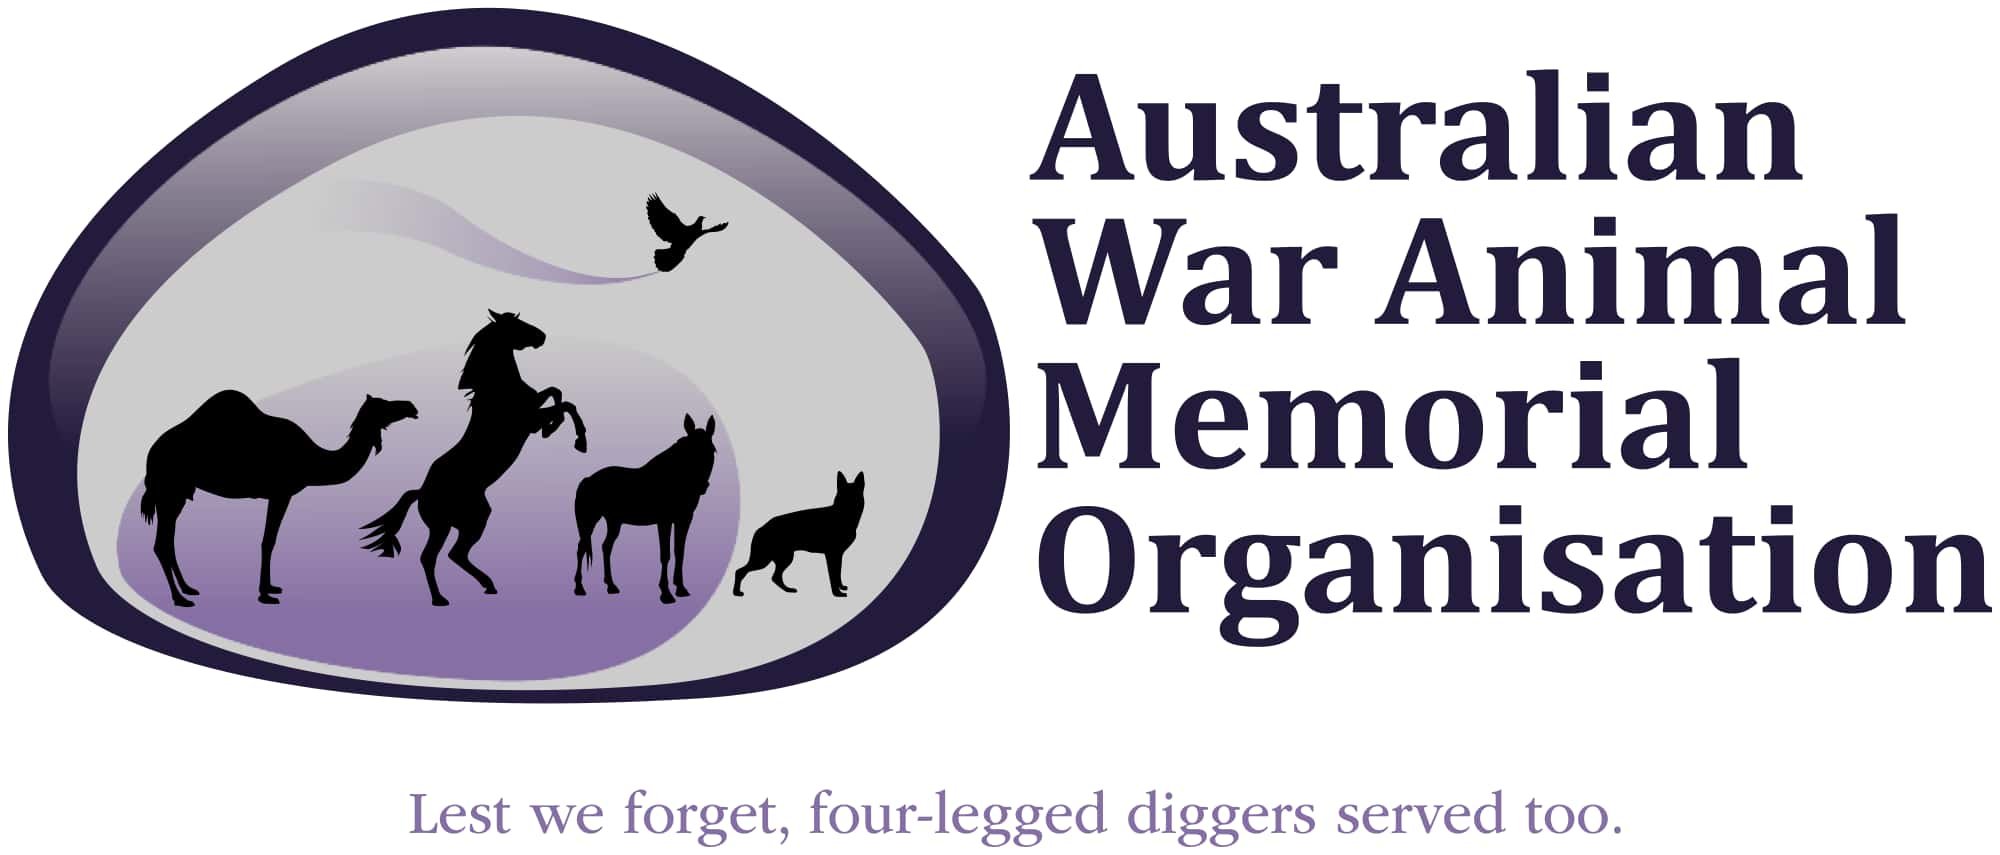 Australian War Animal Memorial Organisation (Copy)